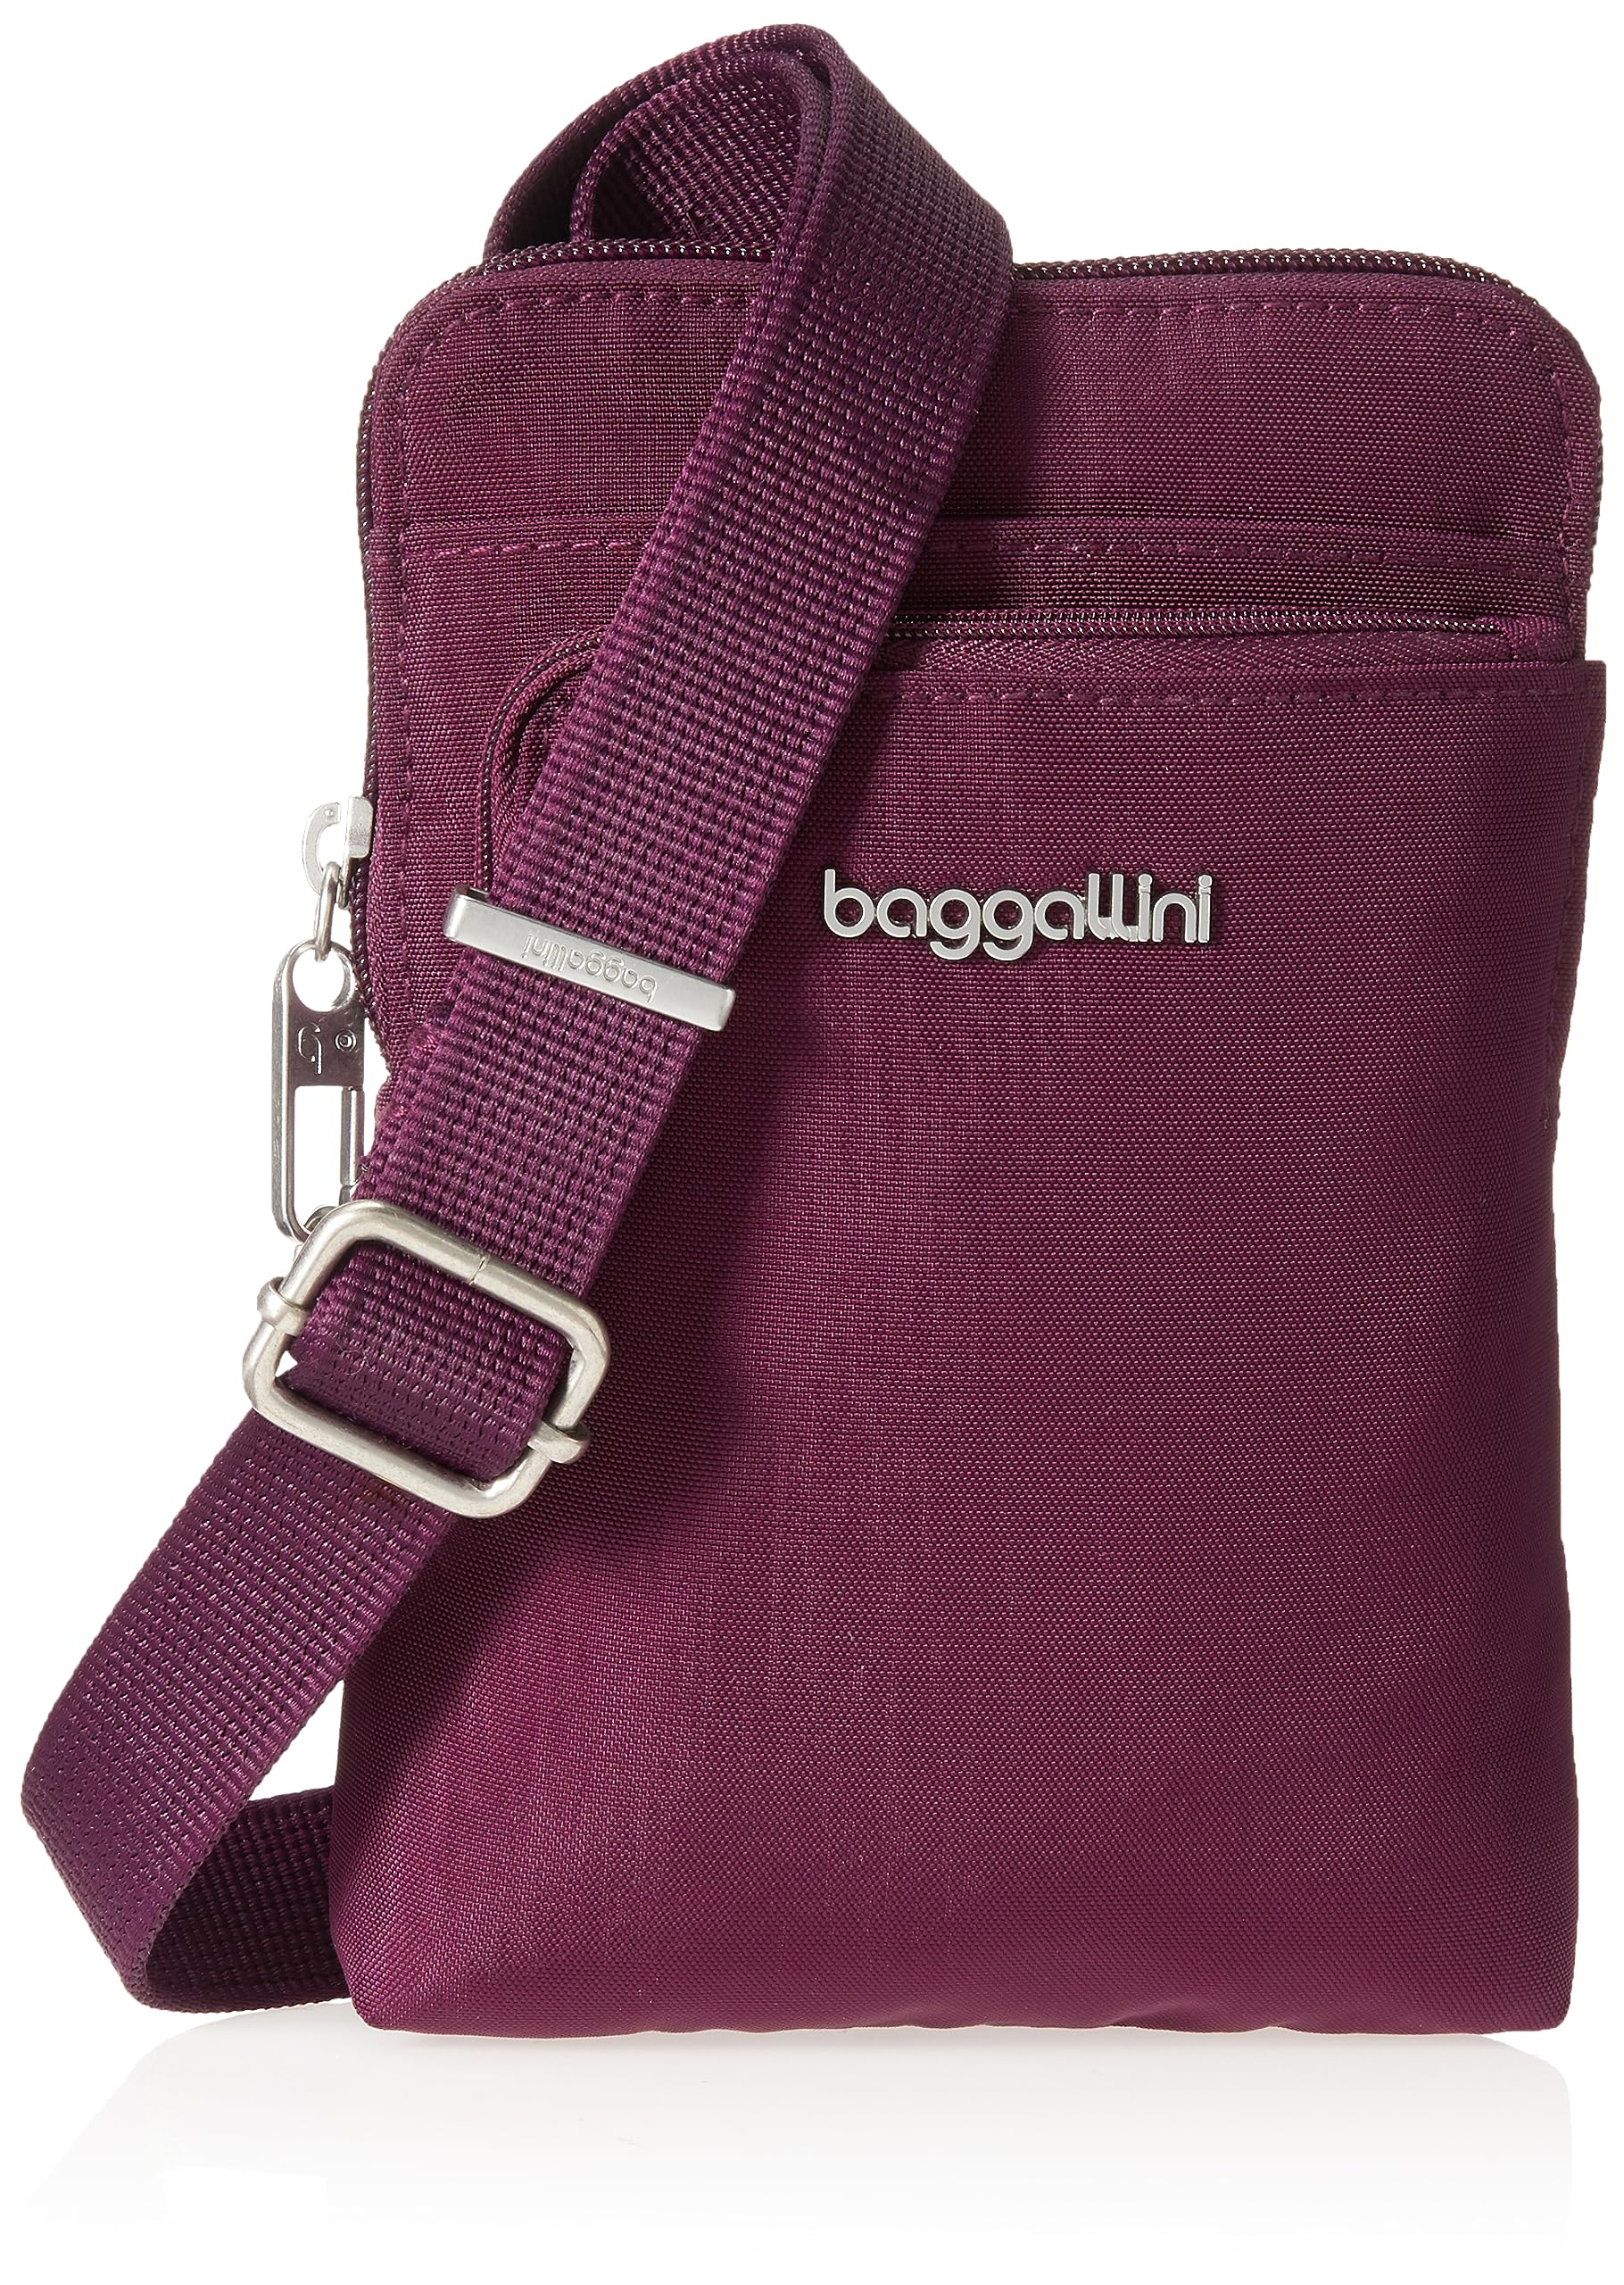 Baggallini Securtex Anti-Theft Activity Crossbody Bag